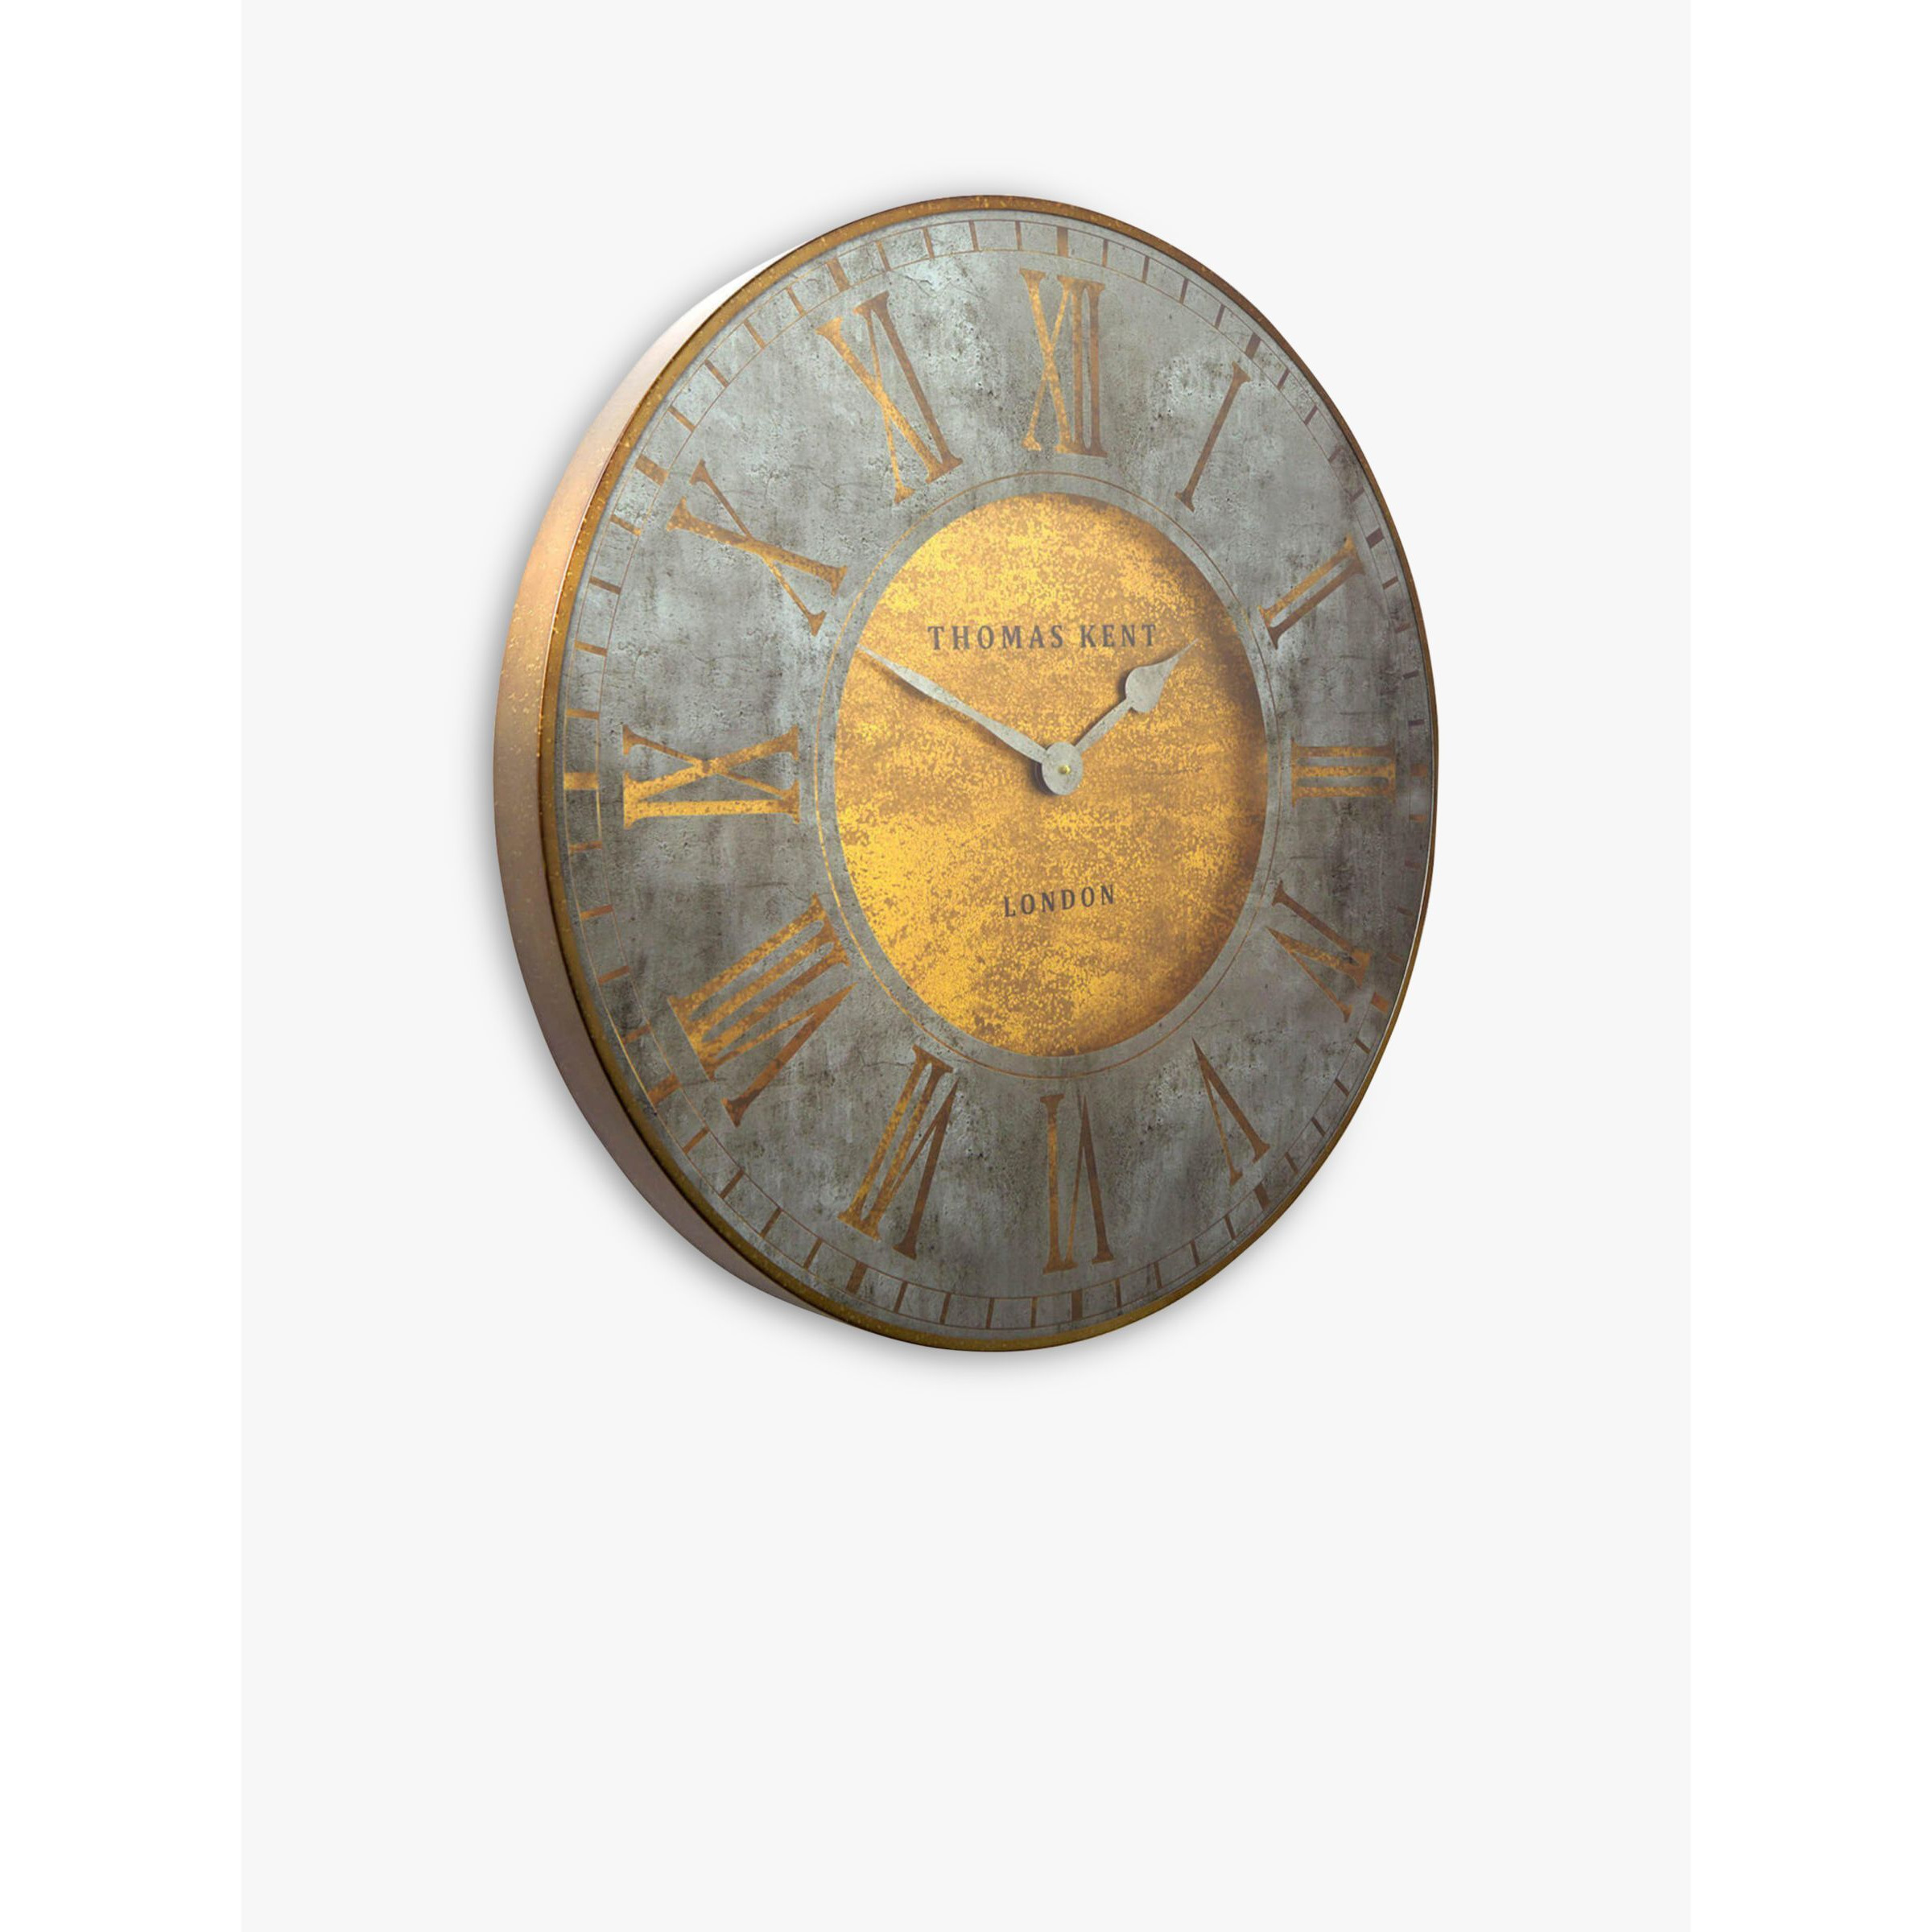 Thomas Kent Florentine Star Roman Numeral Analogue Wall Clock - image 1